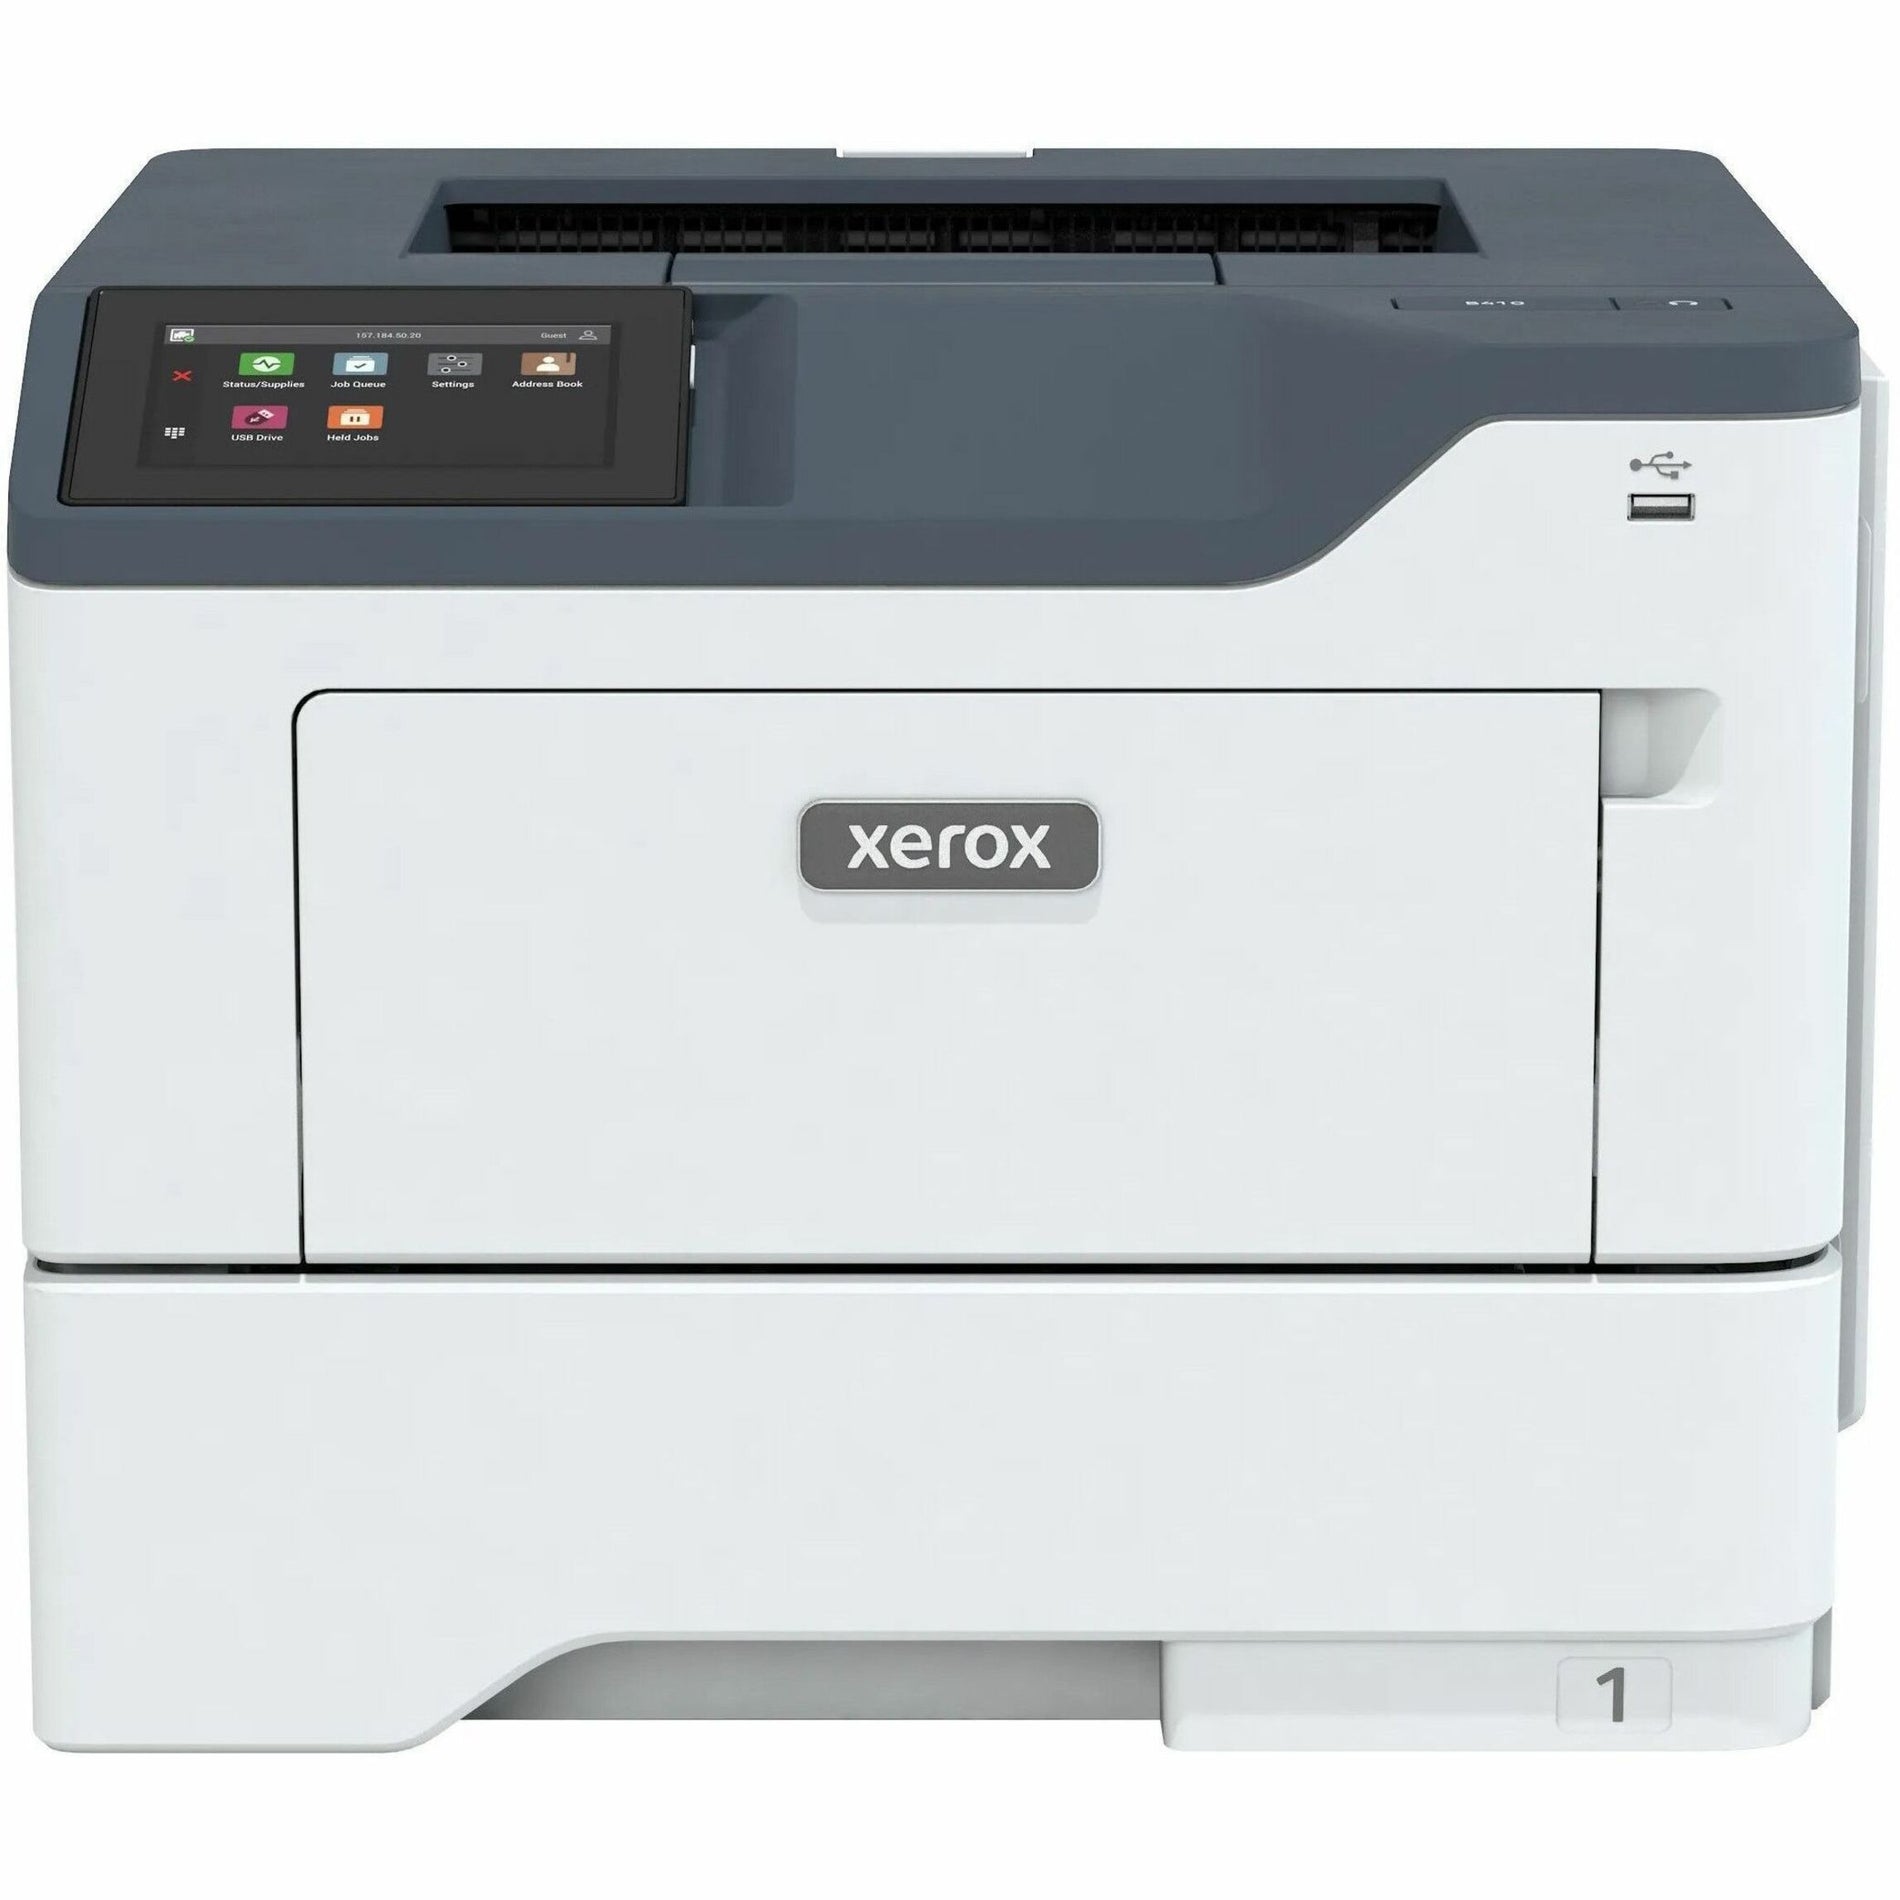 Xerox B410/DN Imprimante Xerox Imprimante laser monochrome 50 ppm Impression recto-verso automatique Ethernet Gigabit Connectivité USB